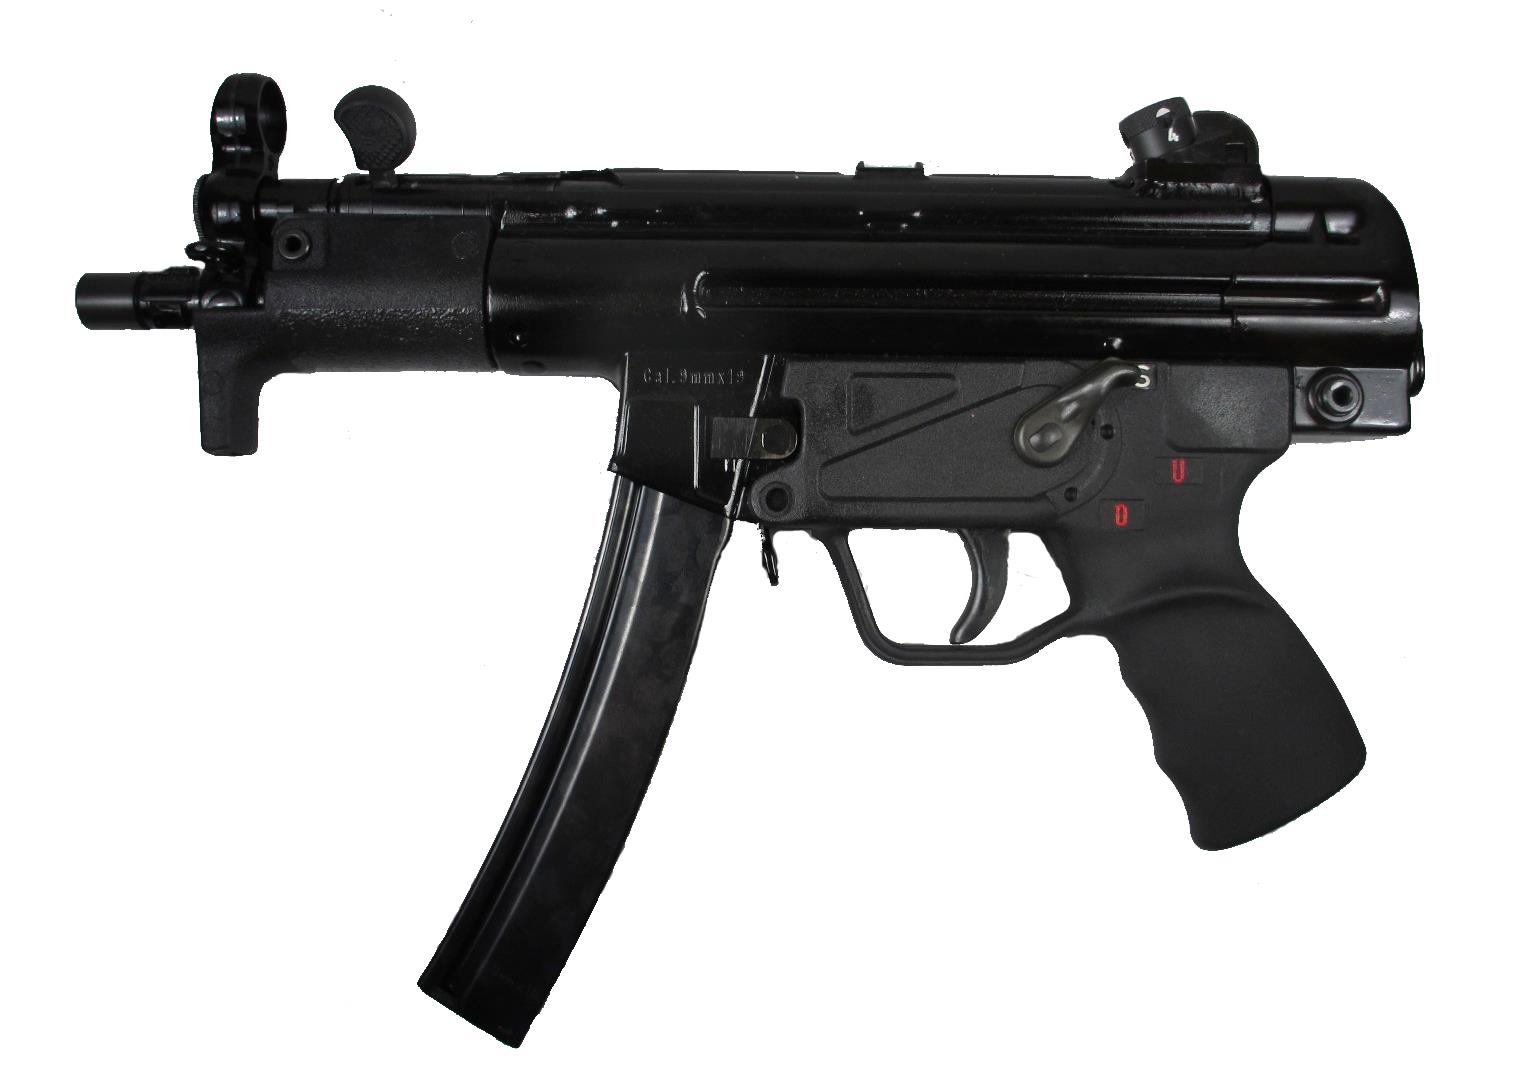 1536x1092 Vector Arms V94s Pistol Hk Mp5 94 9mm For Sale.